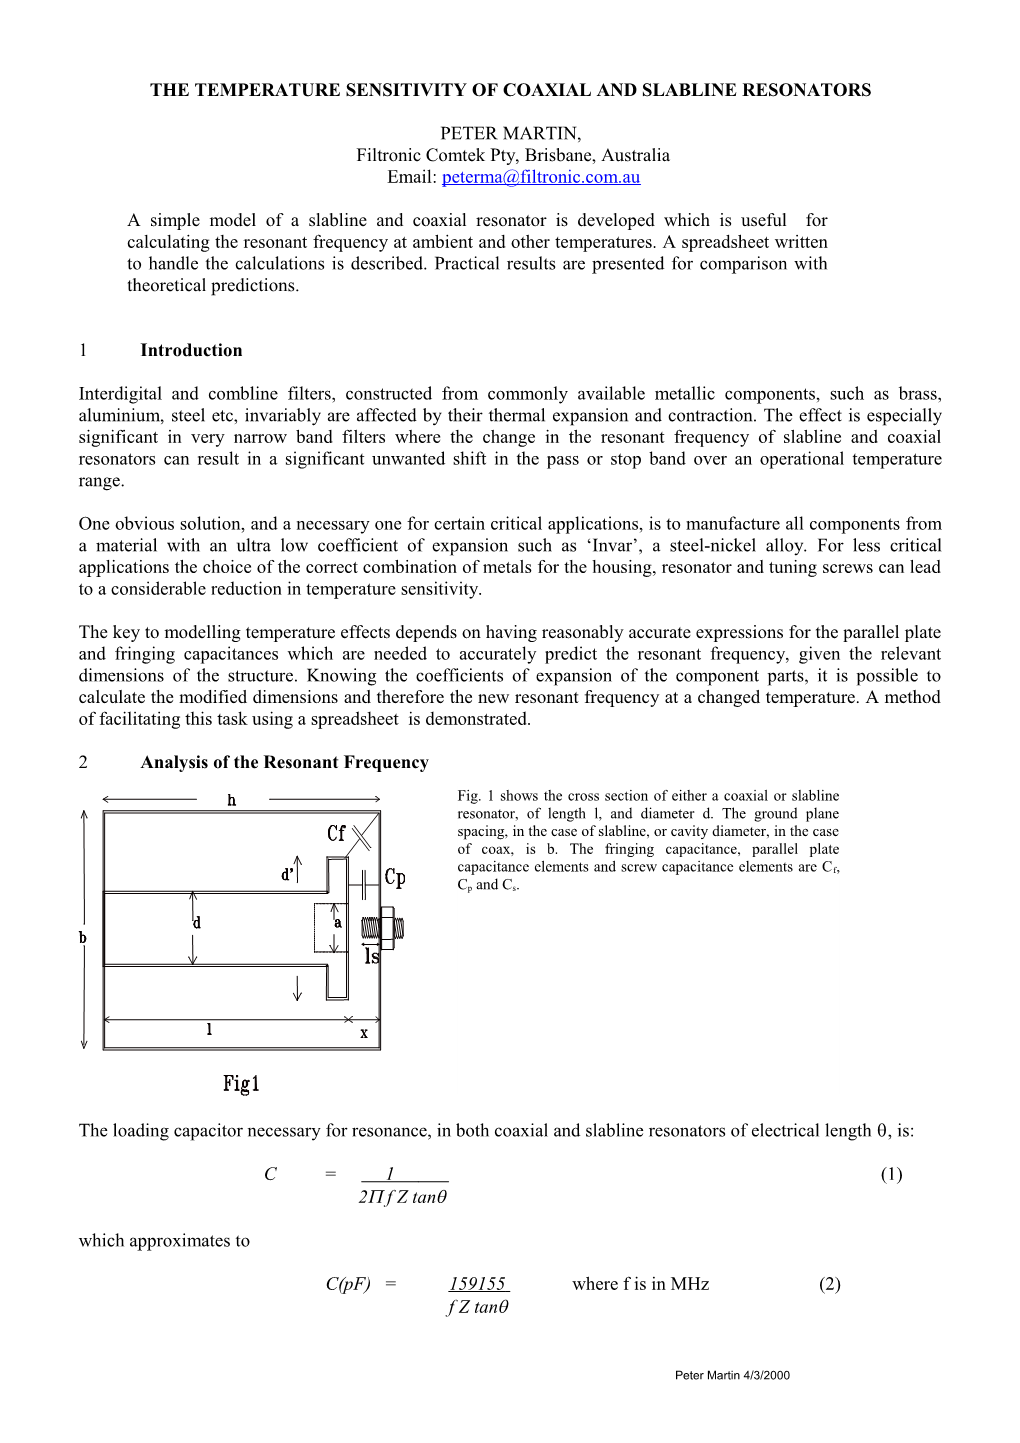 The Temperature Sensitivity of Coaxial and Slabline Resonators